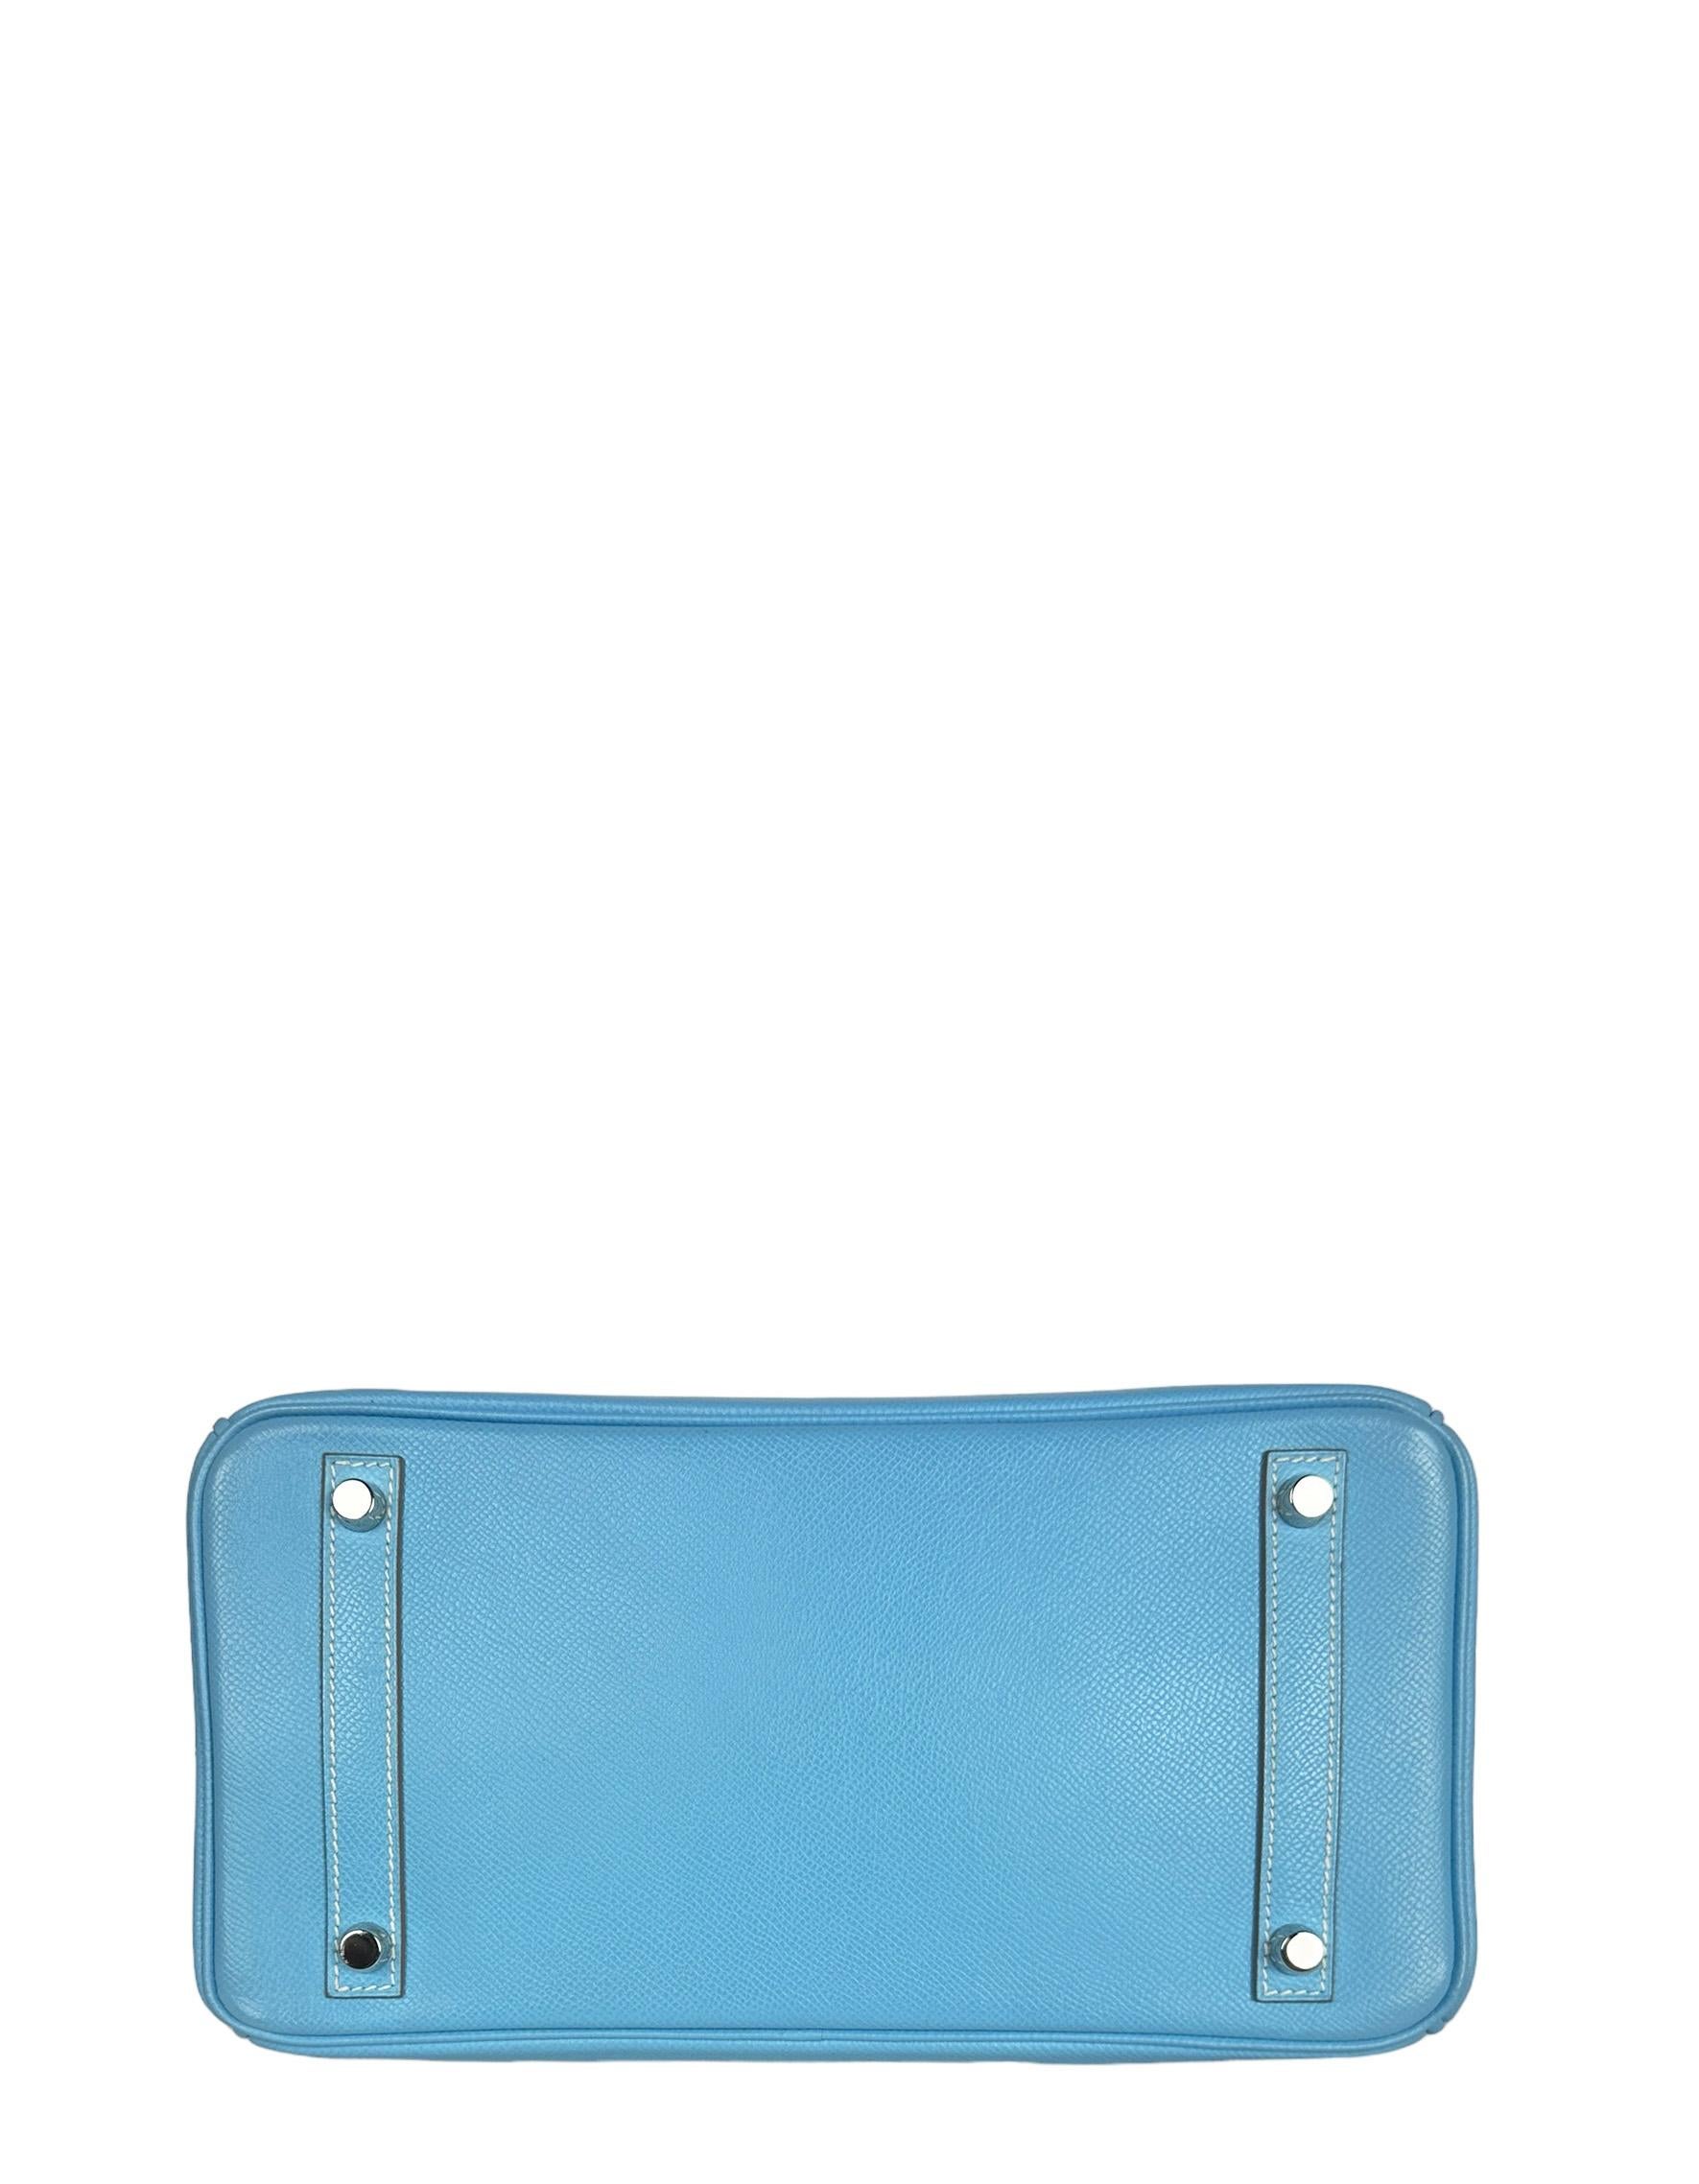 Hermes Bleu Celeste/ Mykonos Epsom Leather Candy Birkin Bag 30cm PHW 3